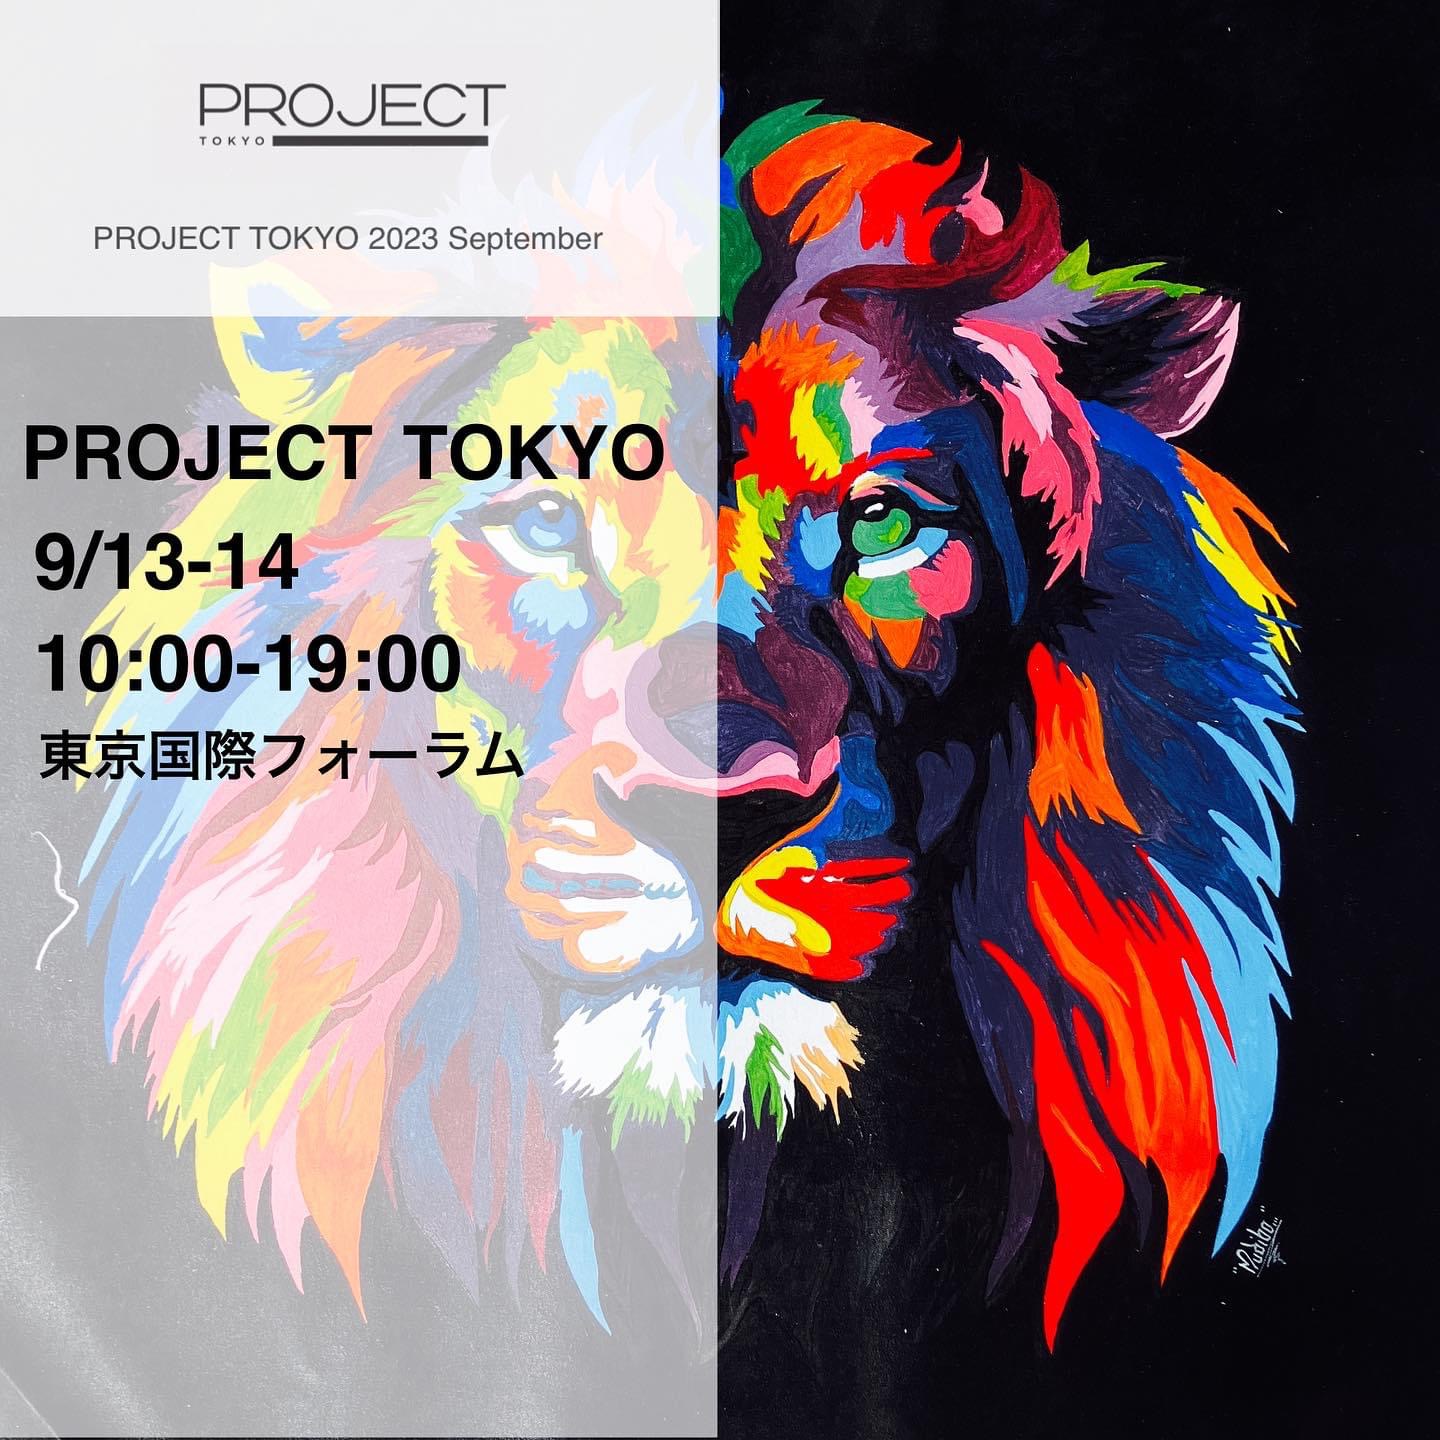 9/13-14、「PROJECT TOKYO 2023」出展!page-visual 9/13-14、「PROJECT TOKYO 2023」出展!ビジュアル